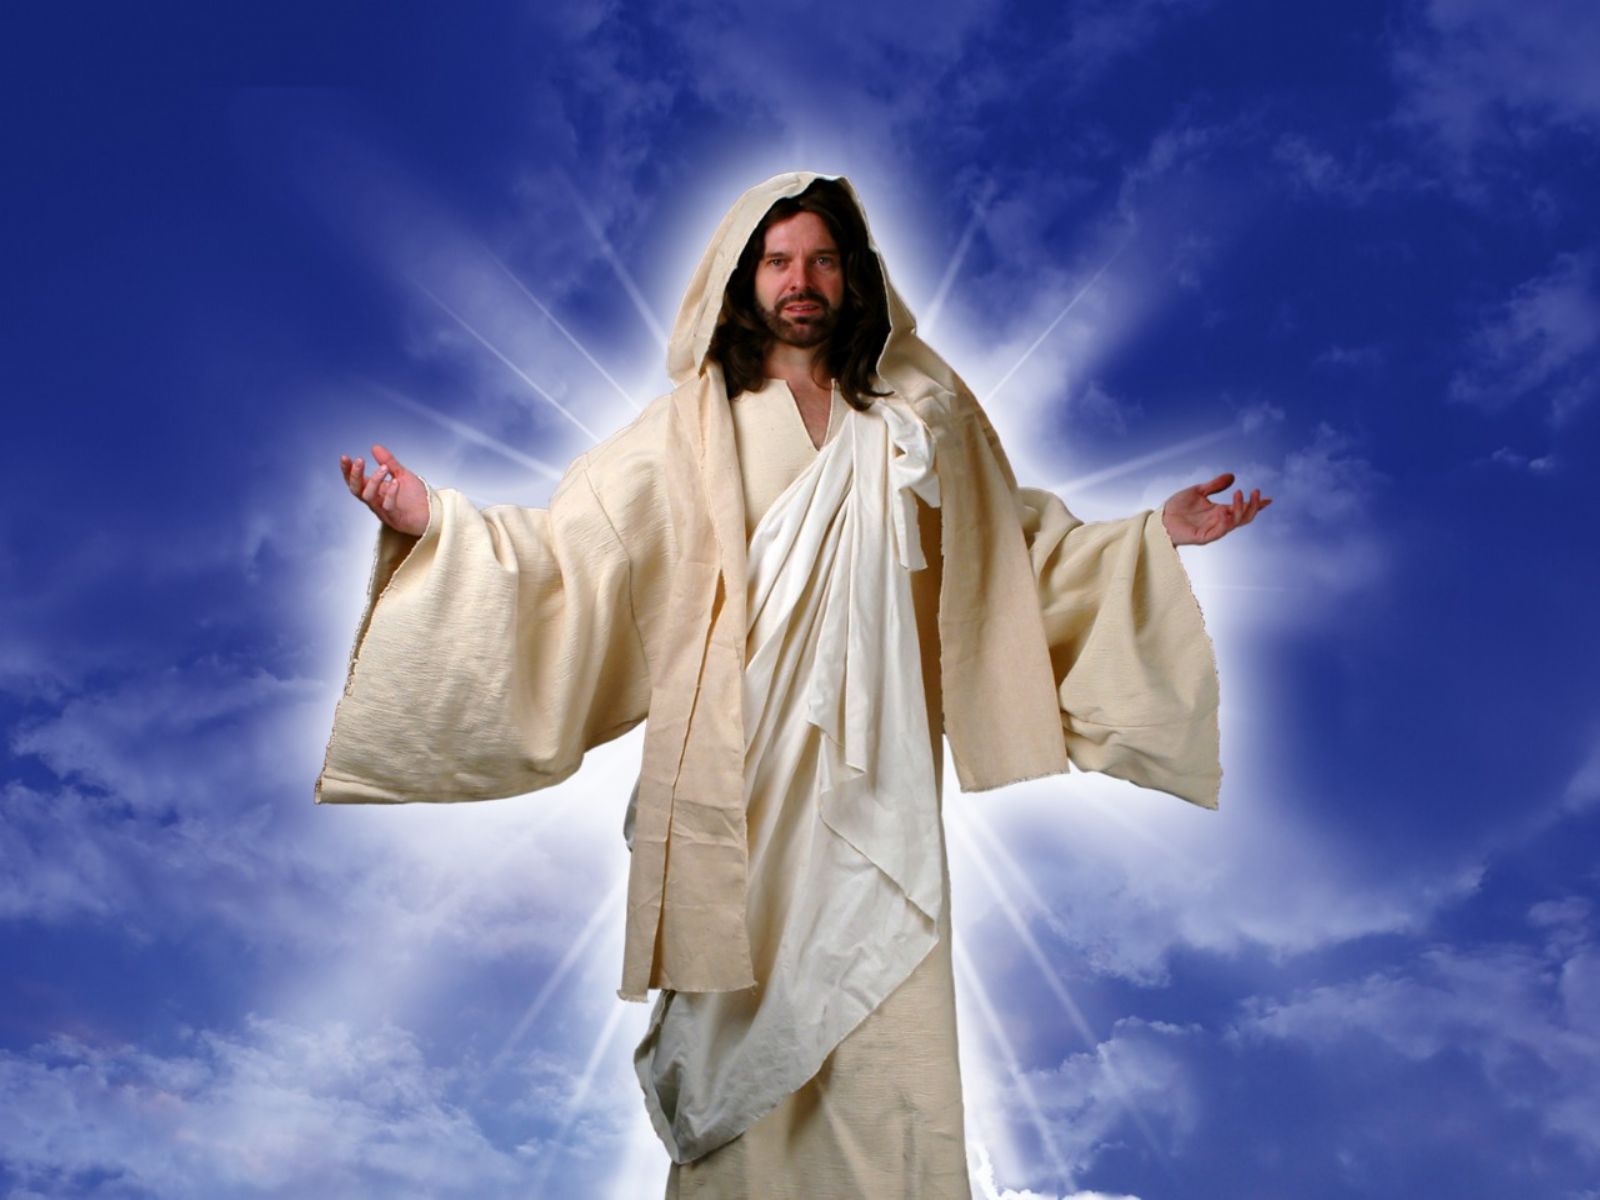 Jesus Wallpapers: Free HD Download [500+ HQ] | Unsplash